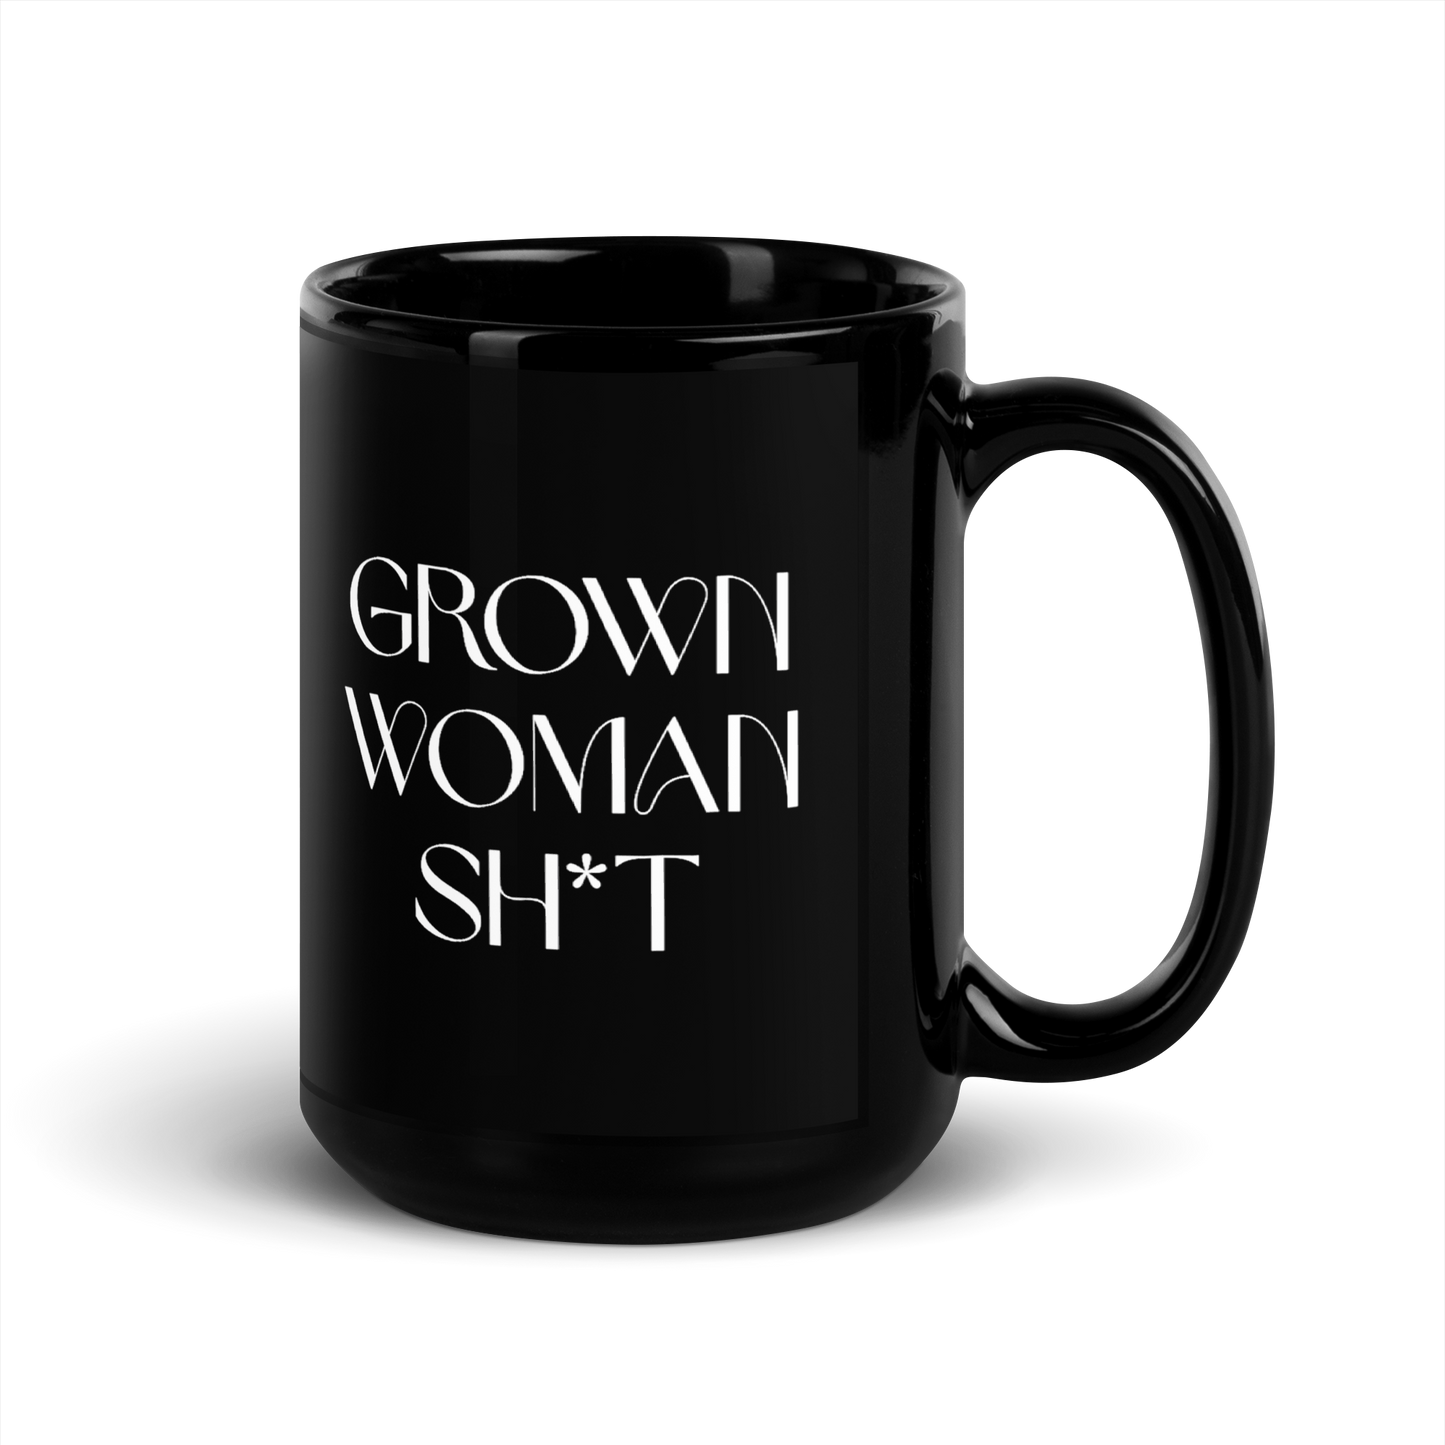 Grown Woman Sh*t Mug